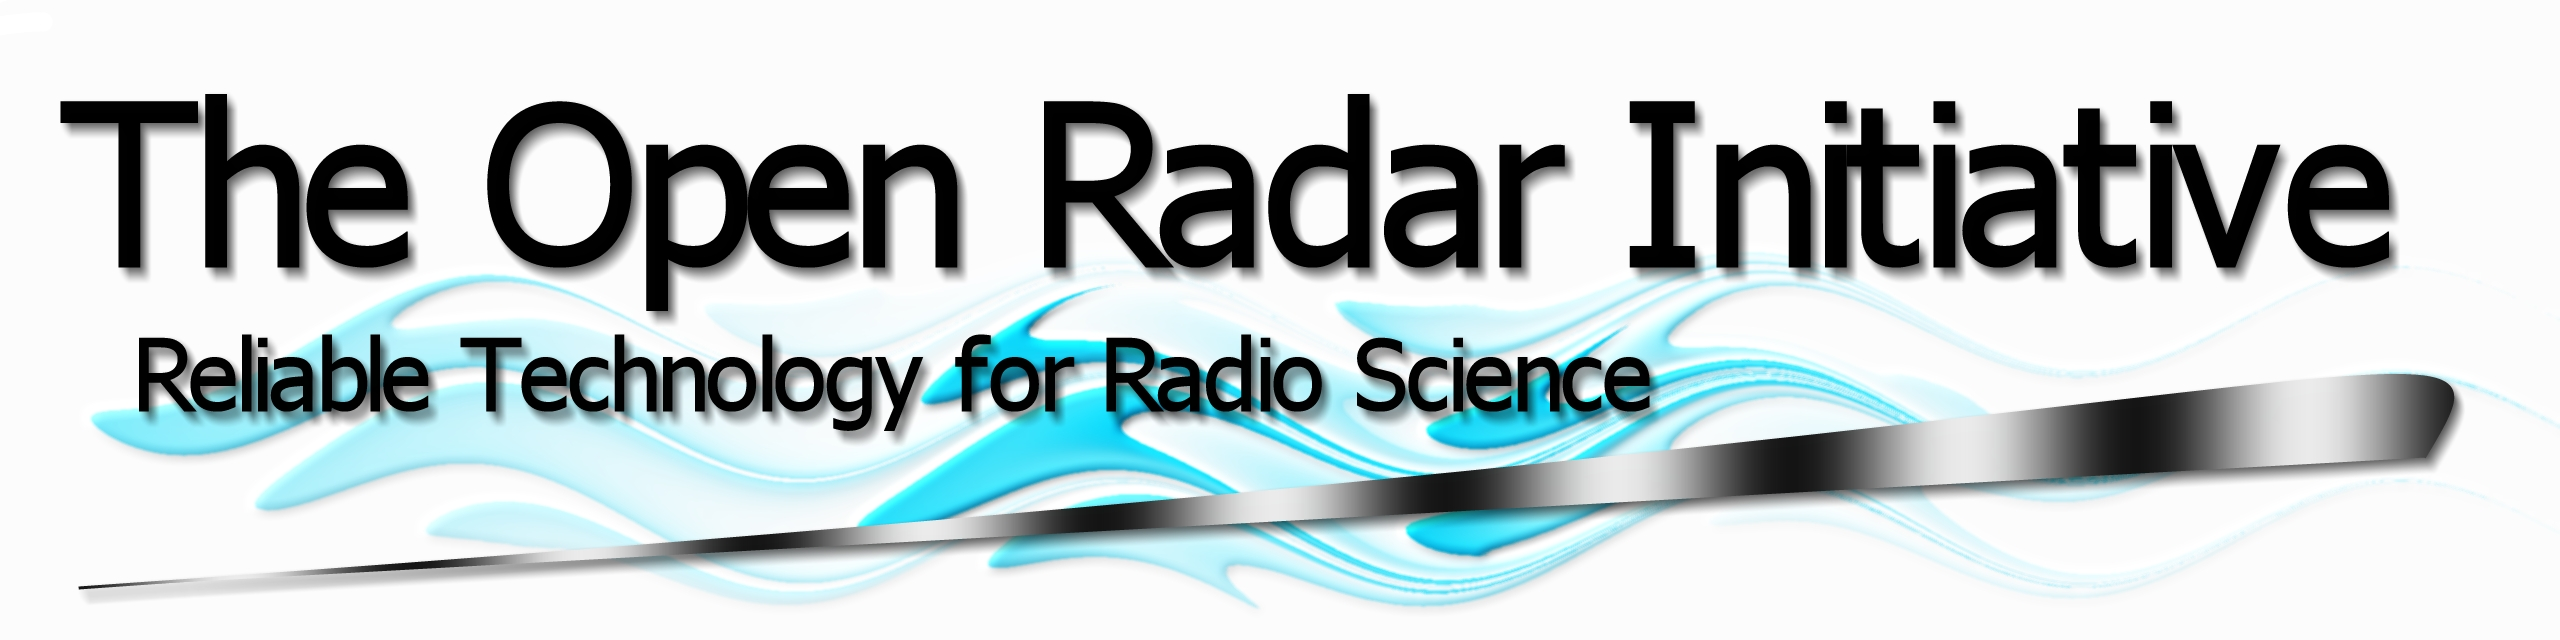 A logo for the Open Radar Initiative